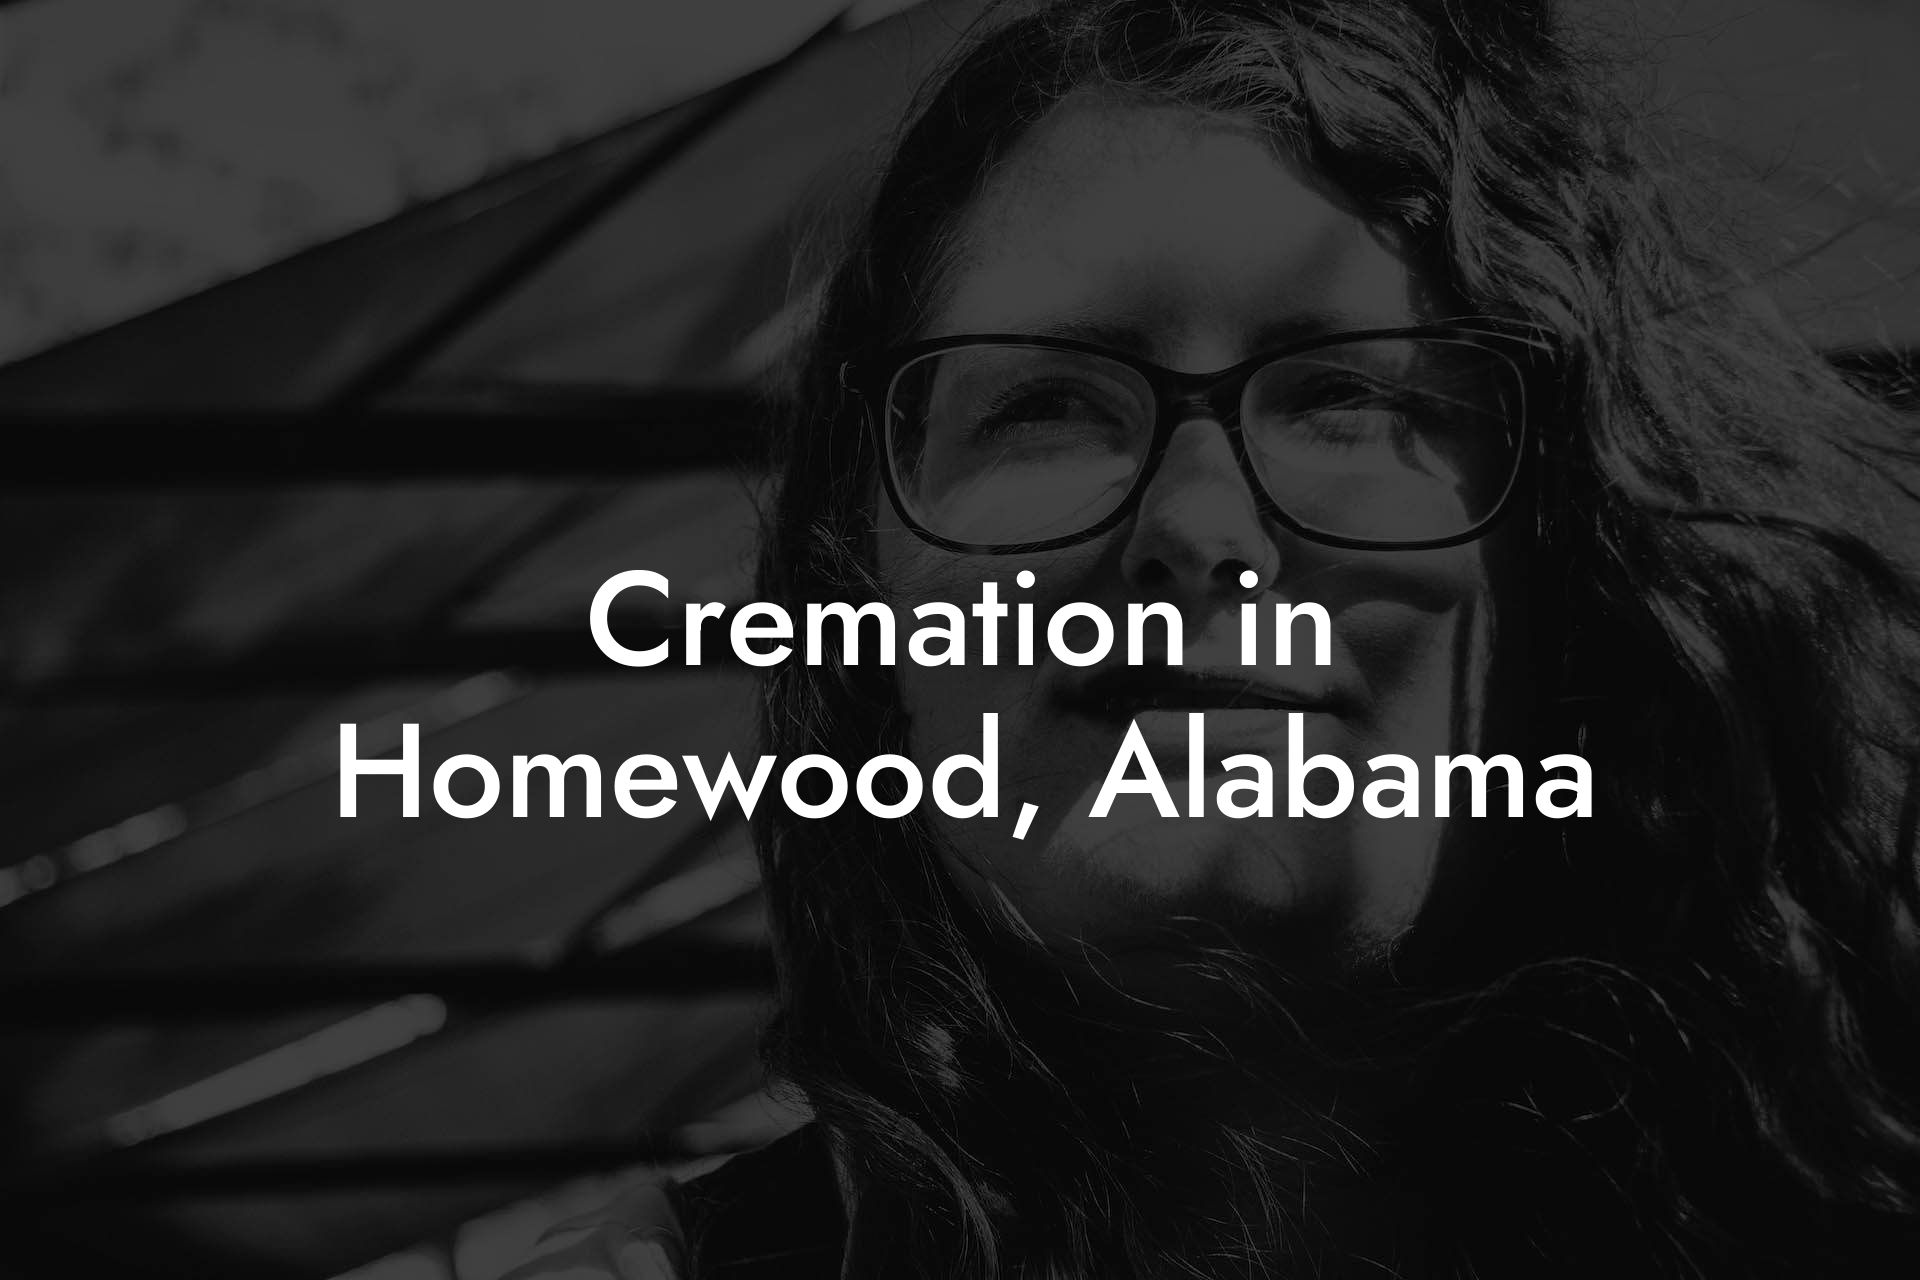 Cremation in Homewood, Alabama